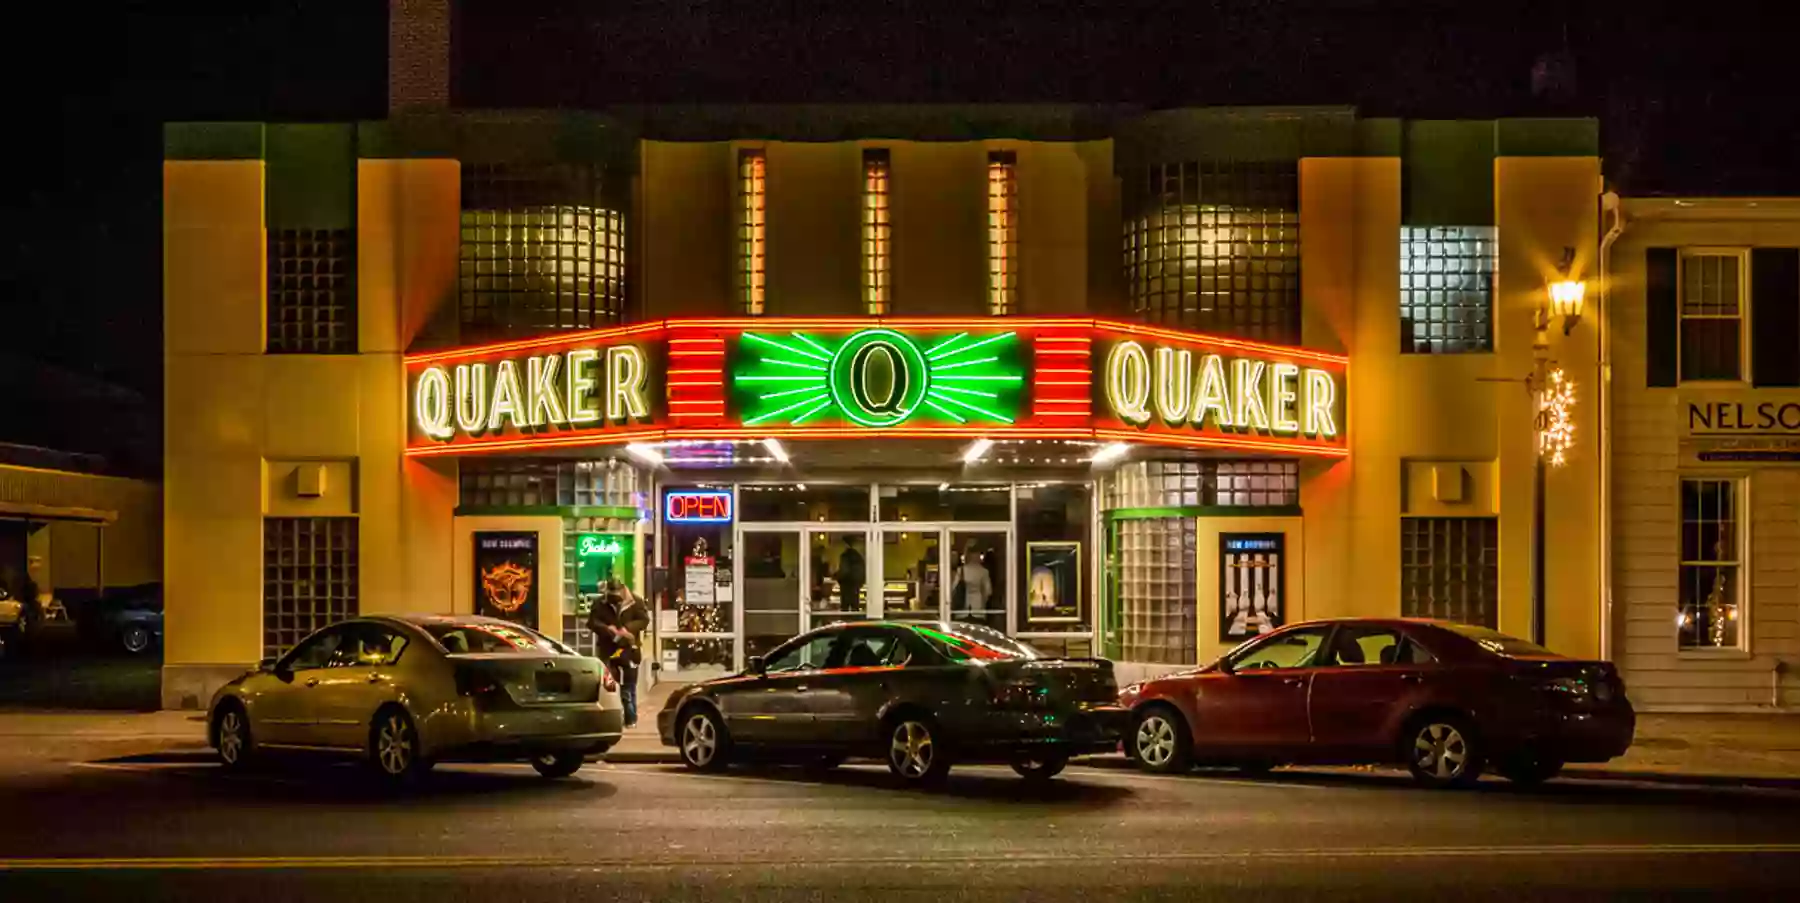 Quaker Cinema